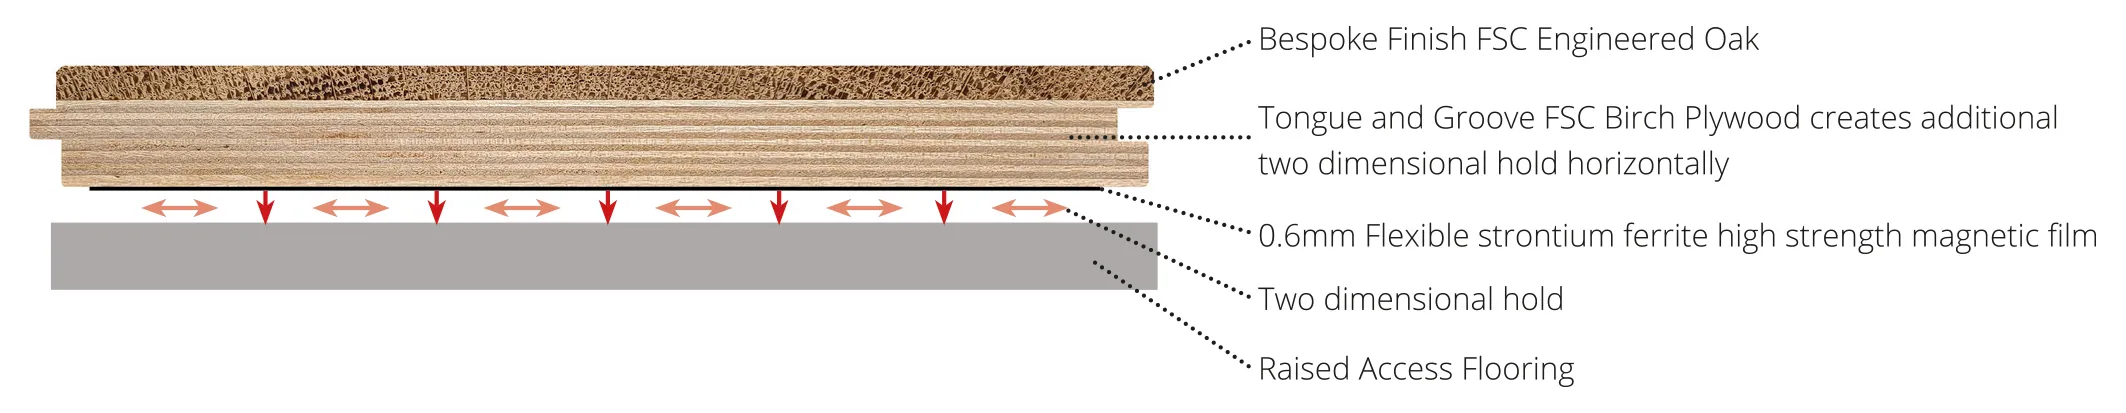 how magnitude flooring works